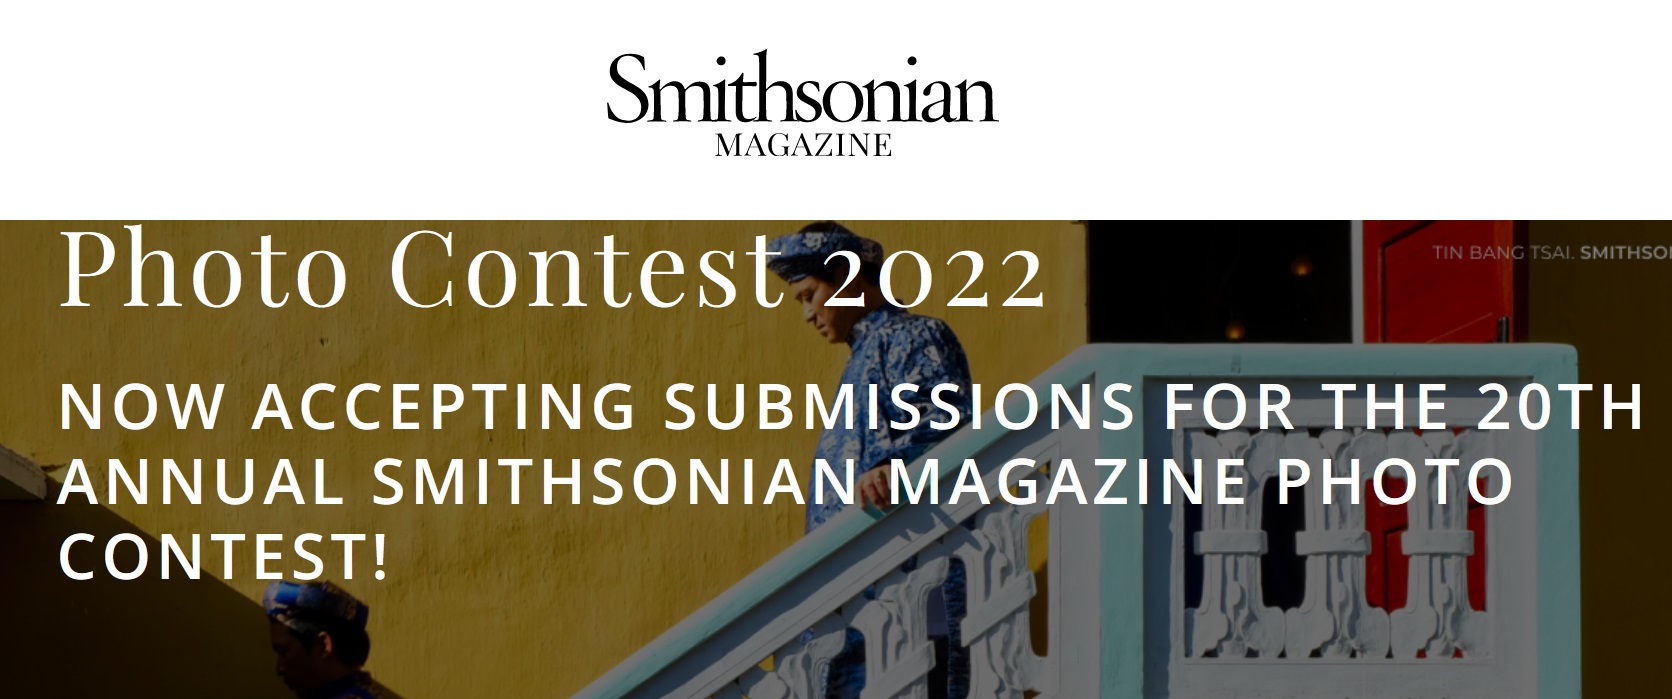 Smithsonian Magazine Photo Contest 2022 - logo